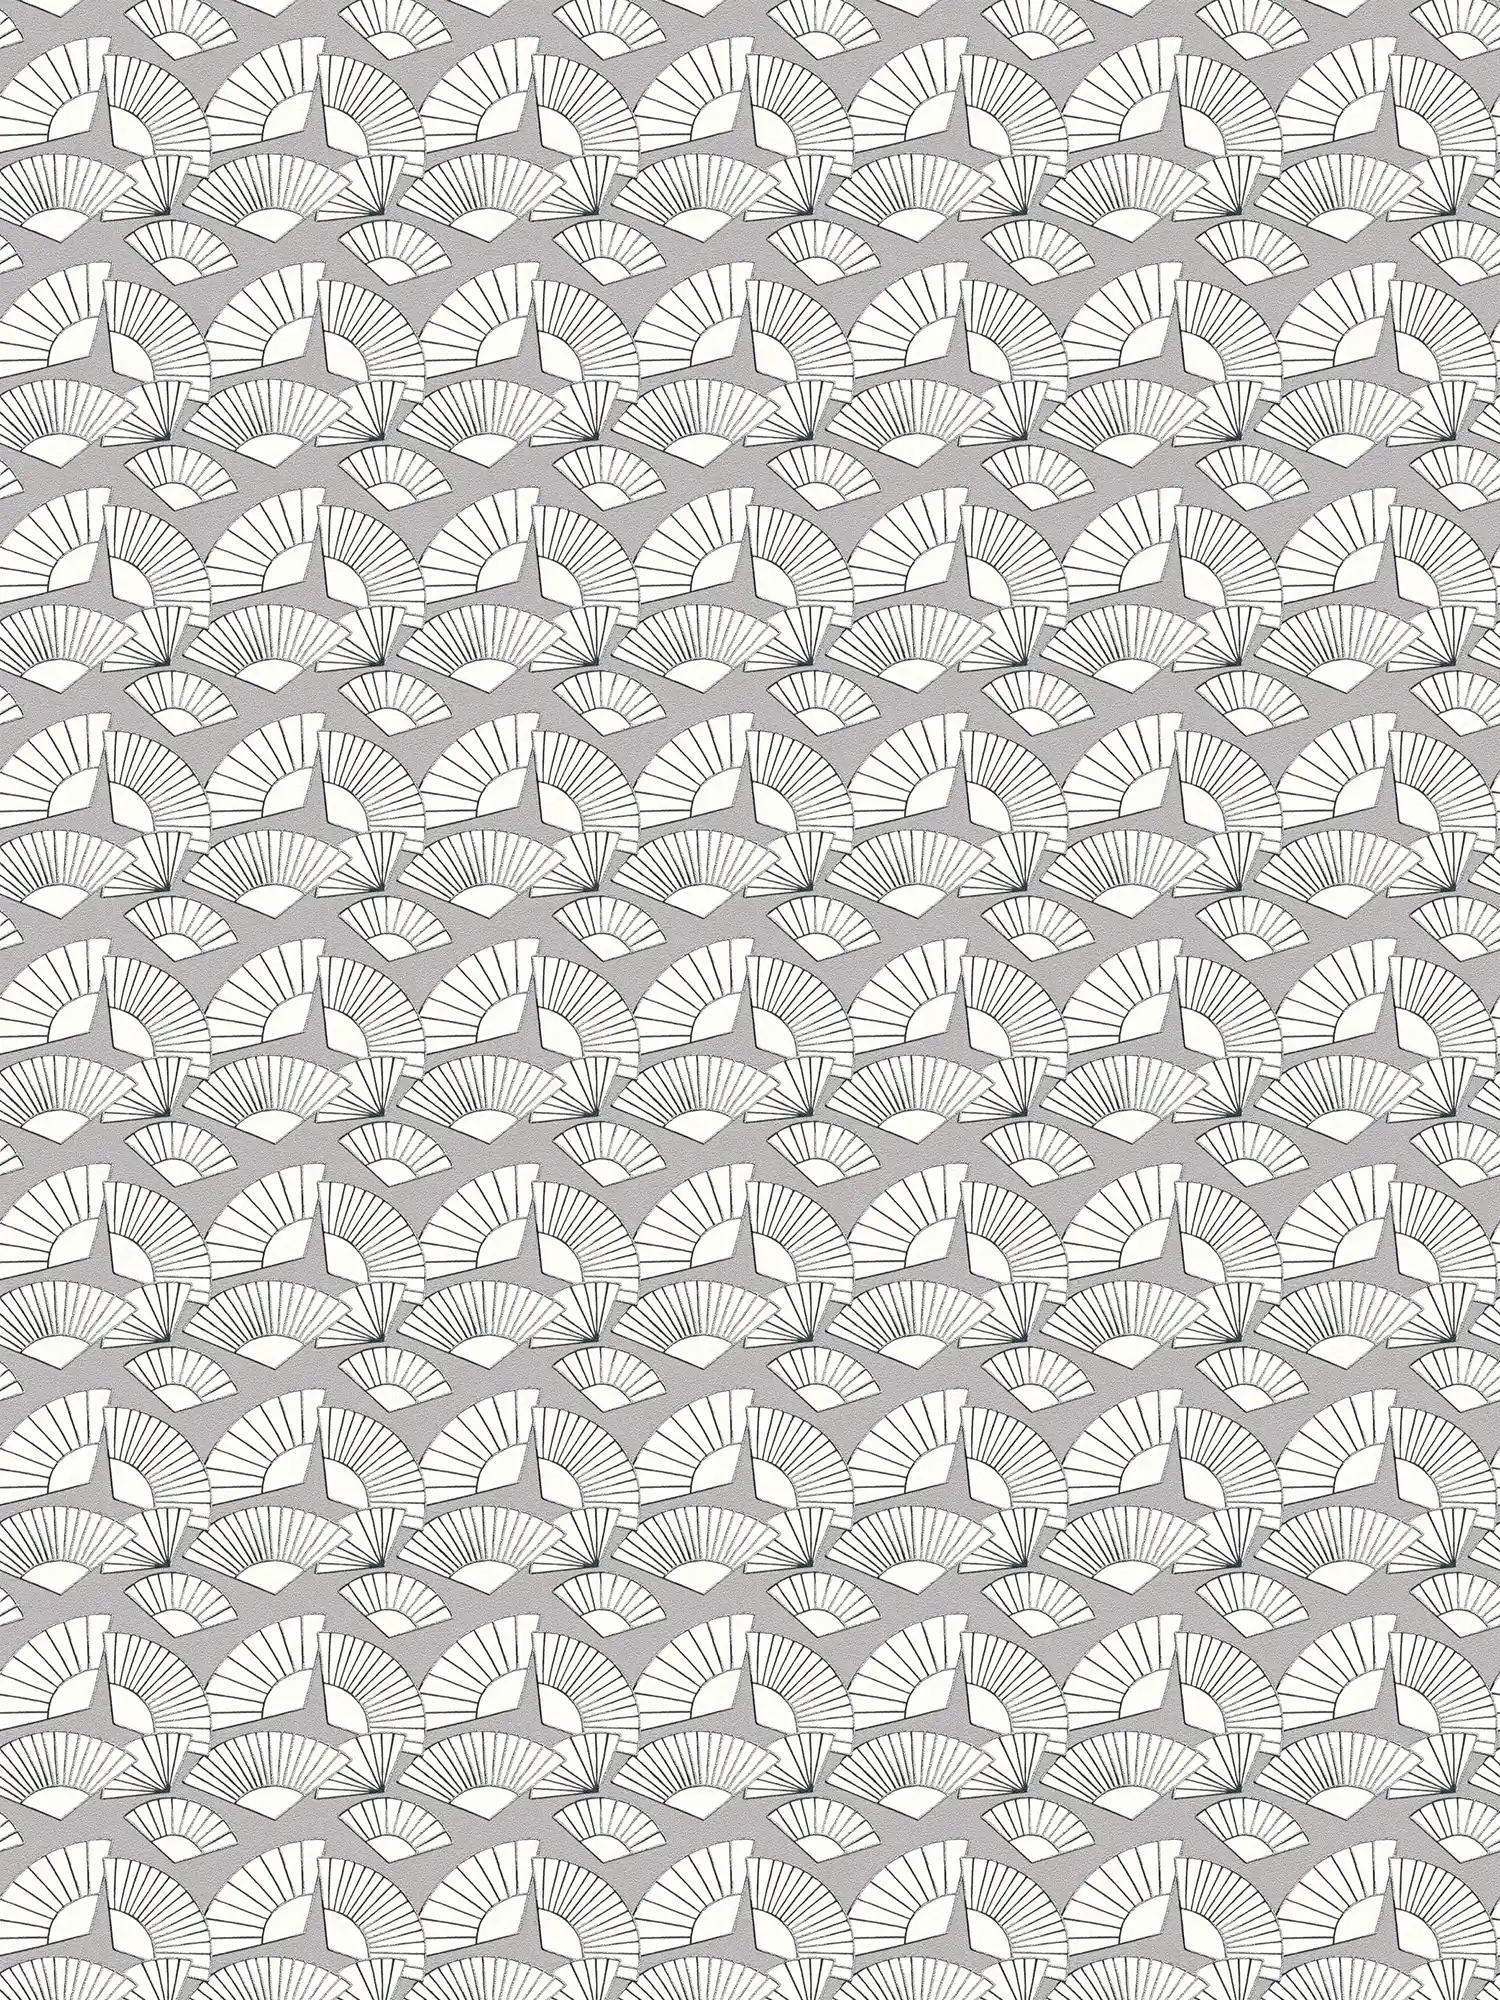 Papier peint Karl LAGERFELD motif éventail - métallique, blanc
